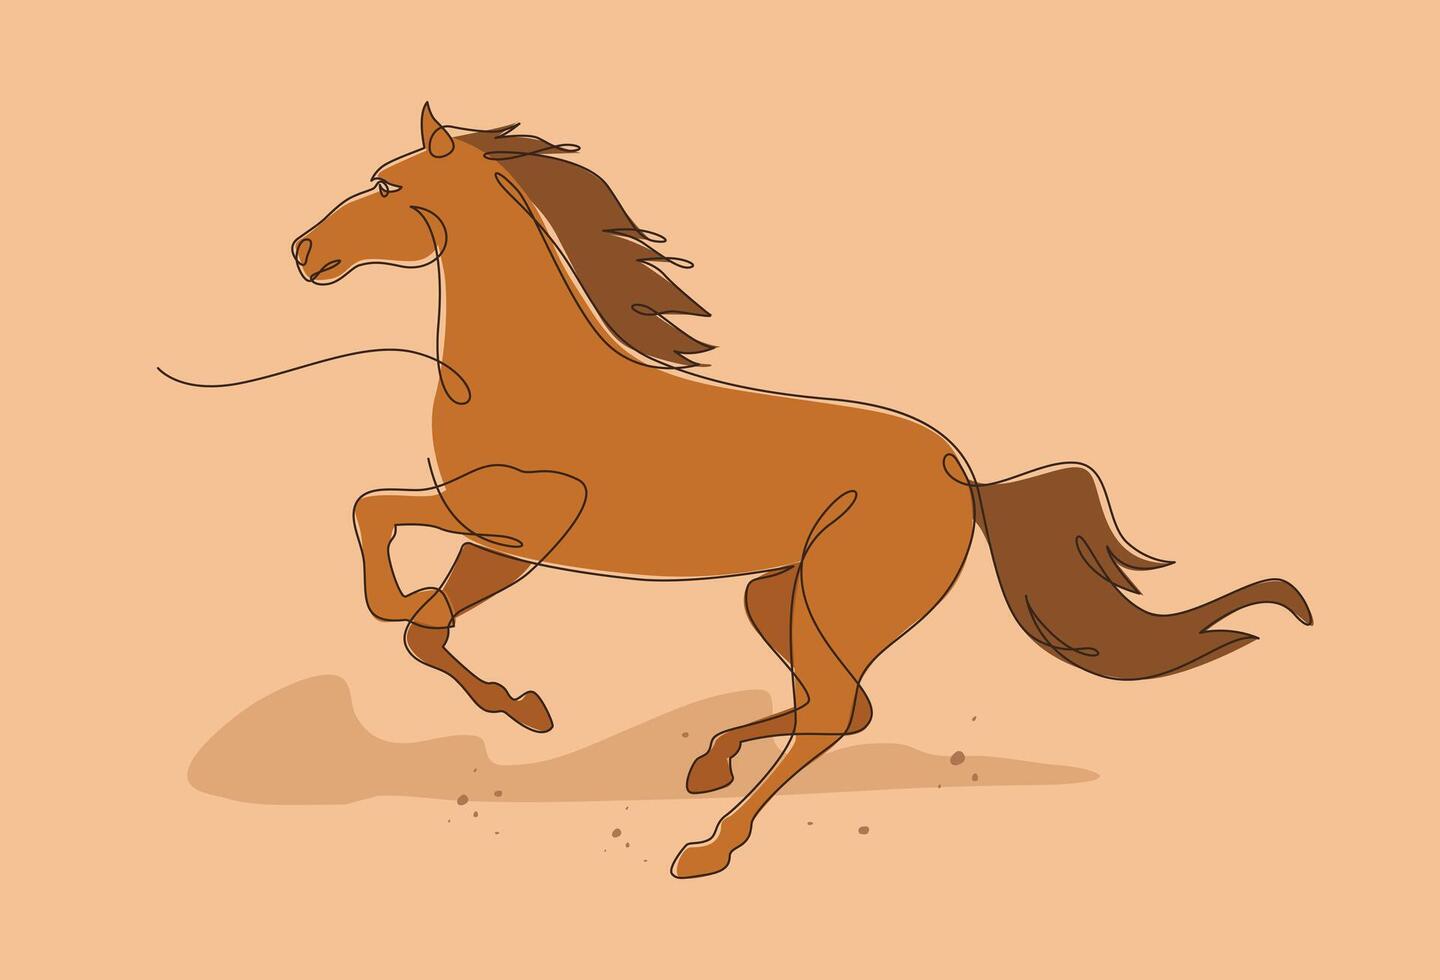 continuo línea dibujo caballo correr, lado ver soltero lineal decorativo diseño concepto. caballo color resumen lineal mínimo estilo, mano dibujado aislado en marrón antecedentes. vector ilustración.